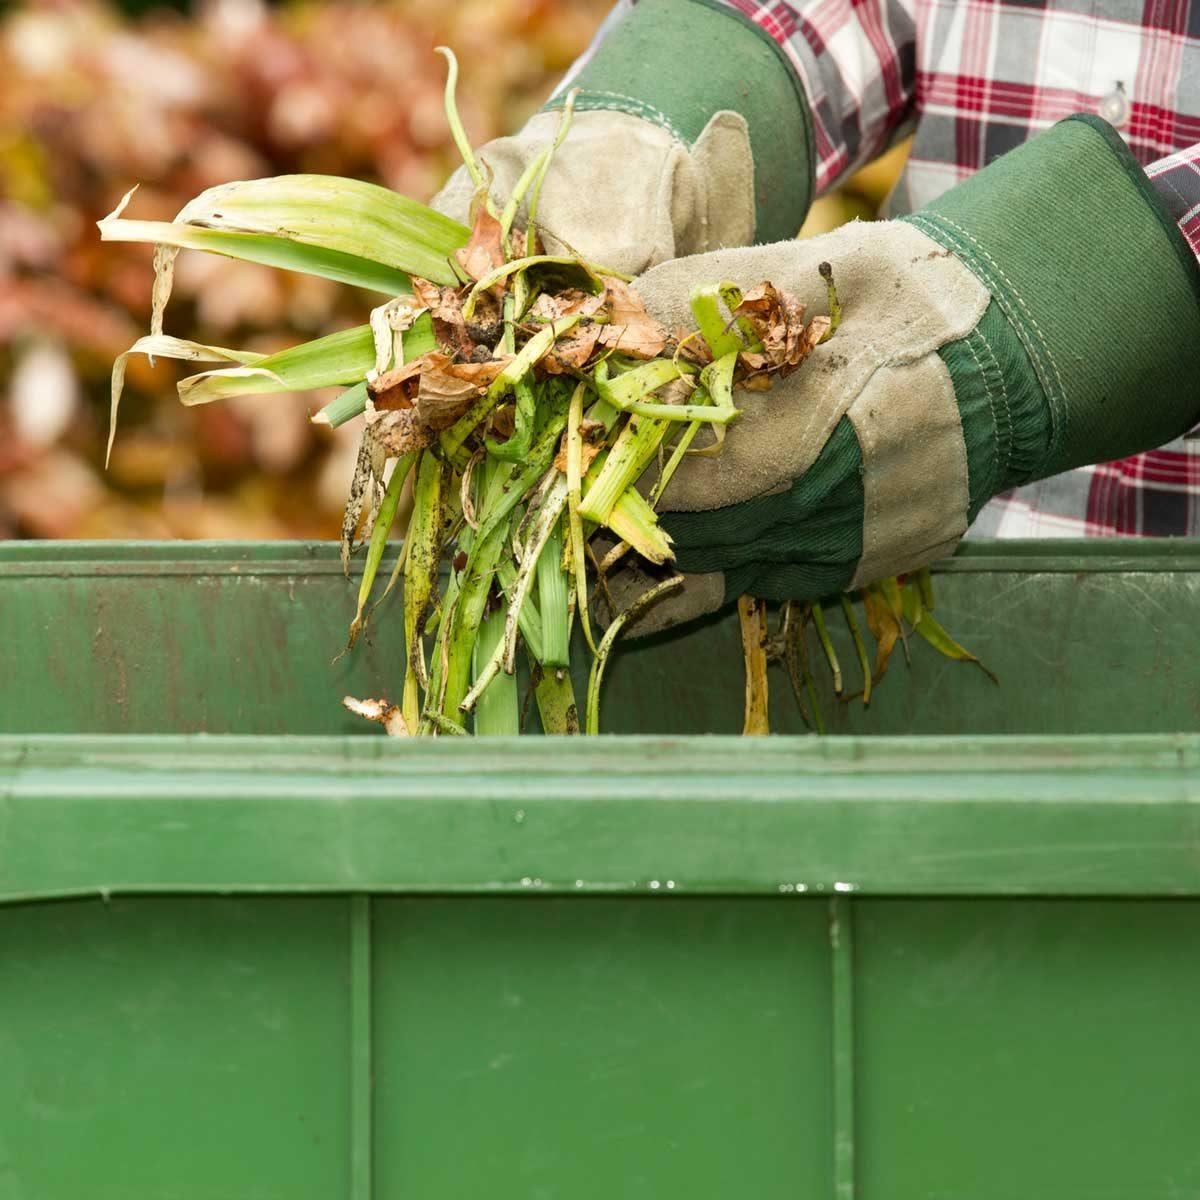 6 Ways to Dispose of Yard Waste Family Handyman